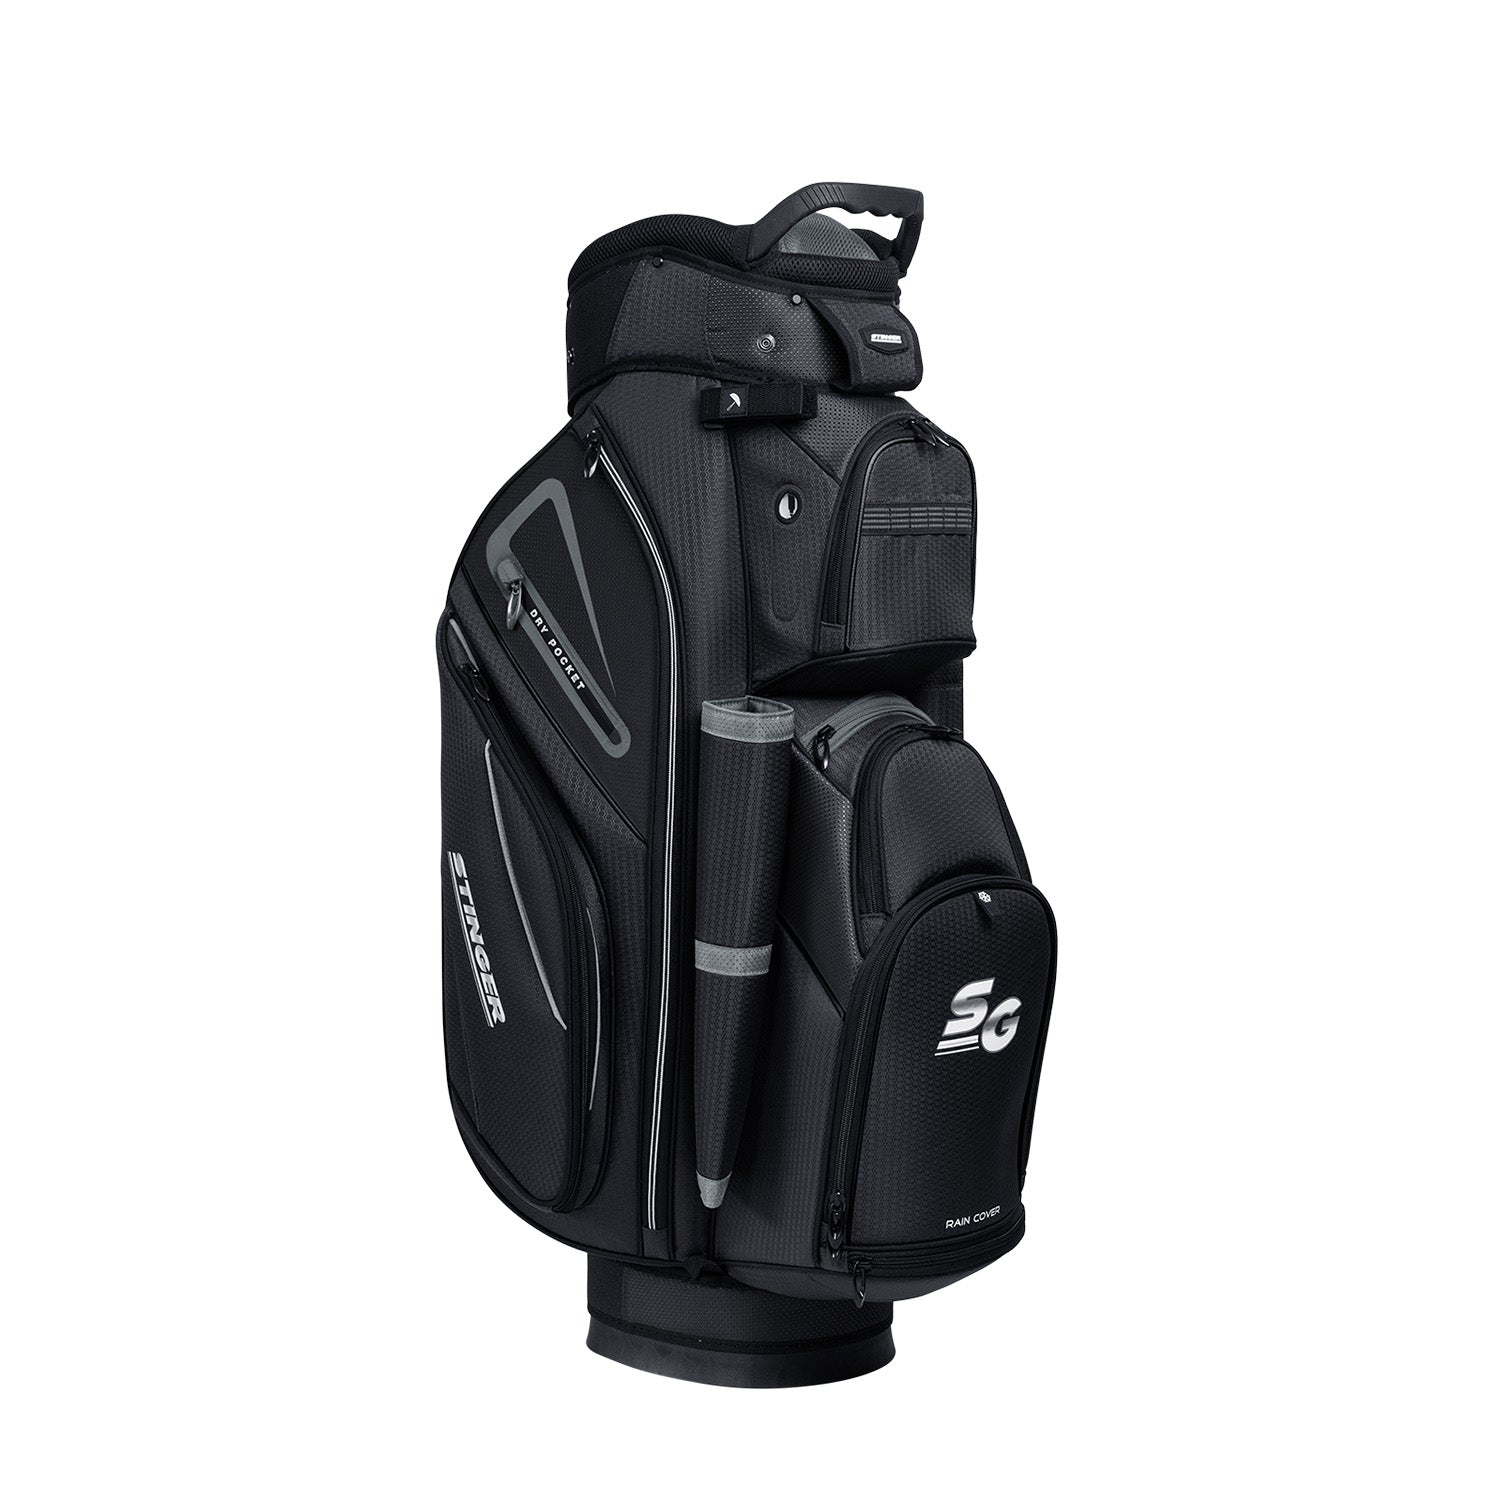 Stinger Premium Golf Bag - Black/Grey